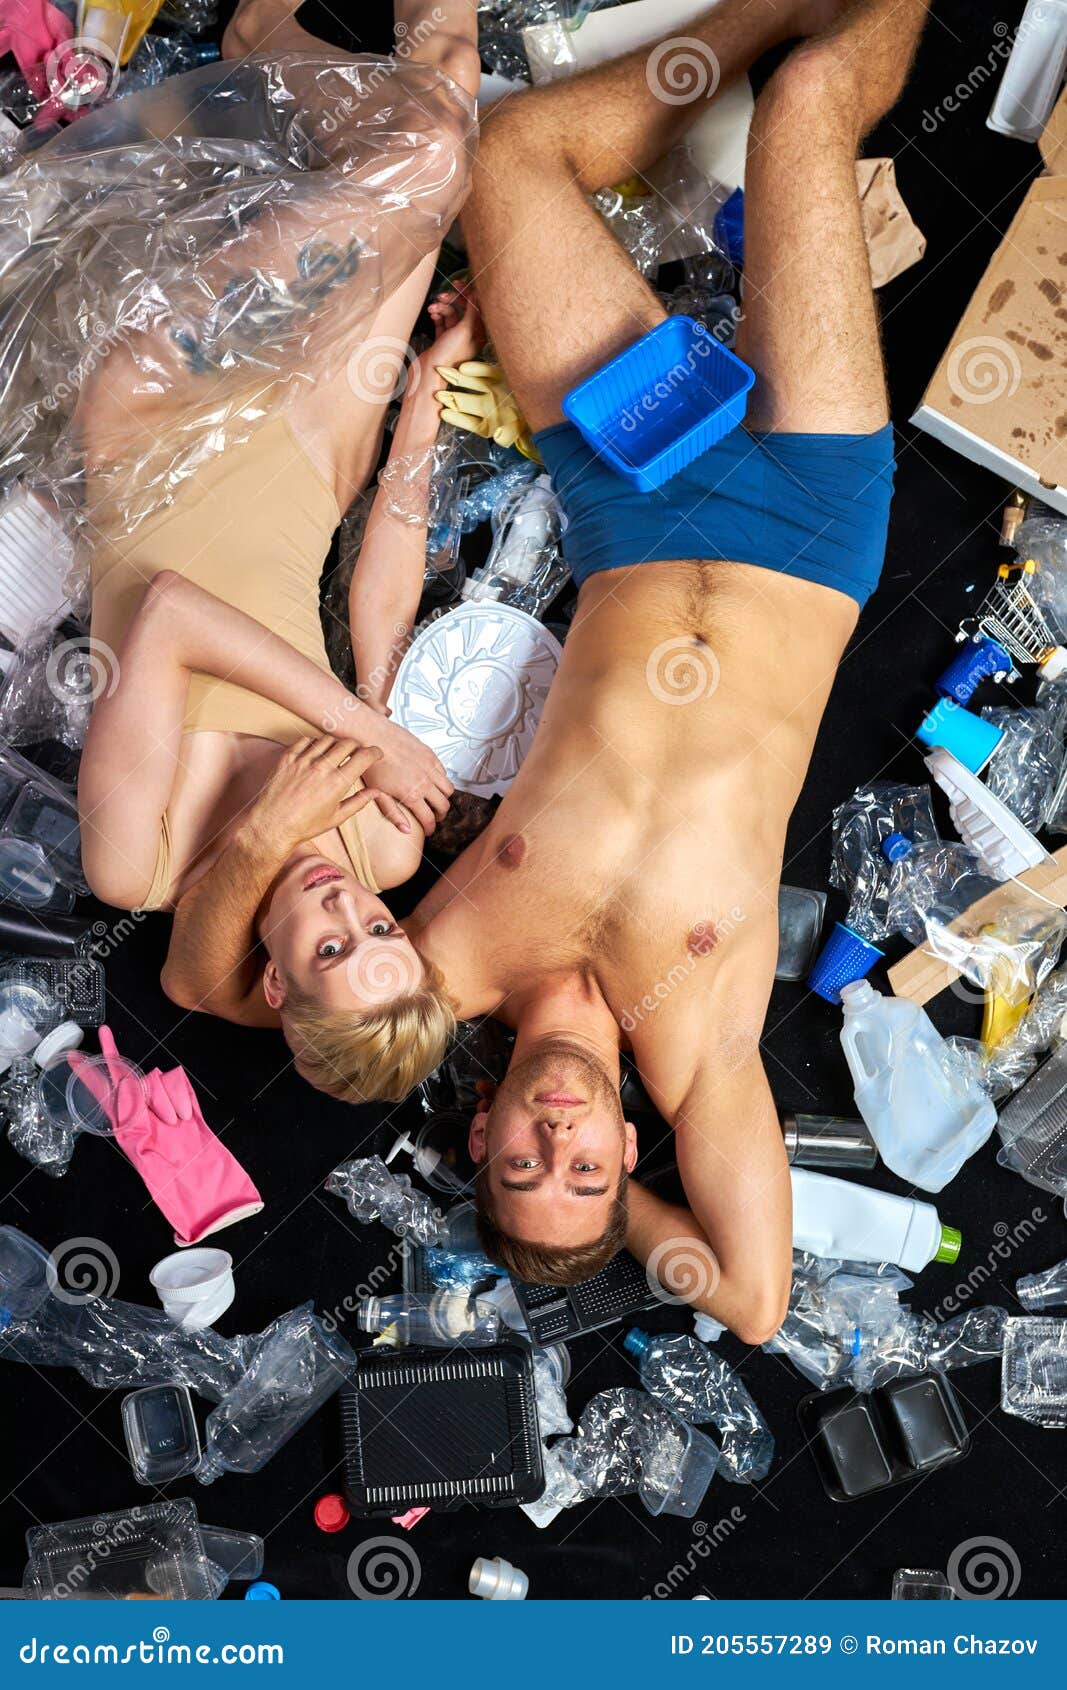 Trash Garbage Naked Pictures